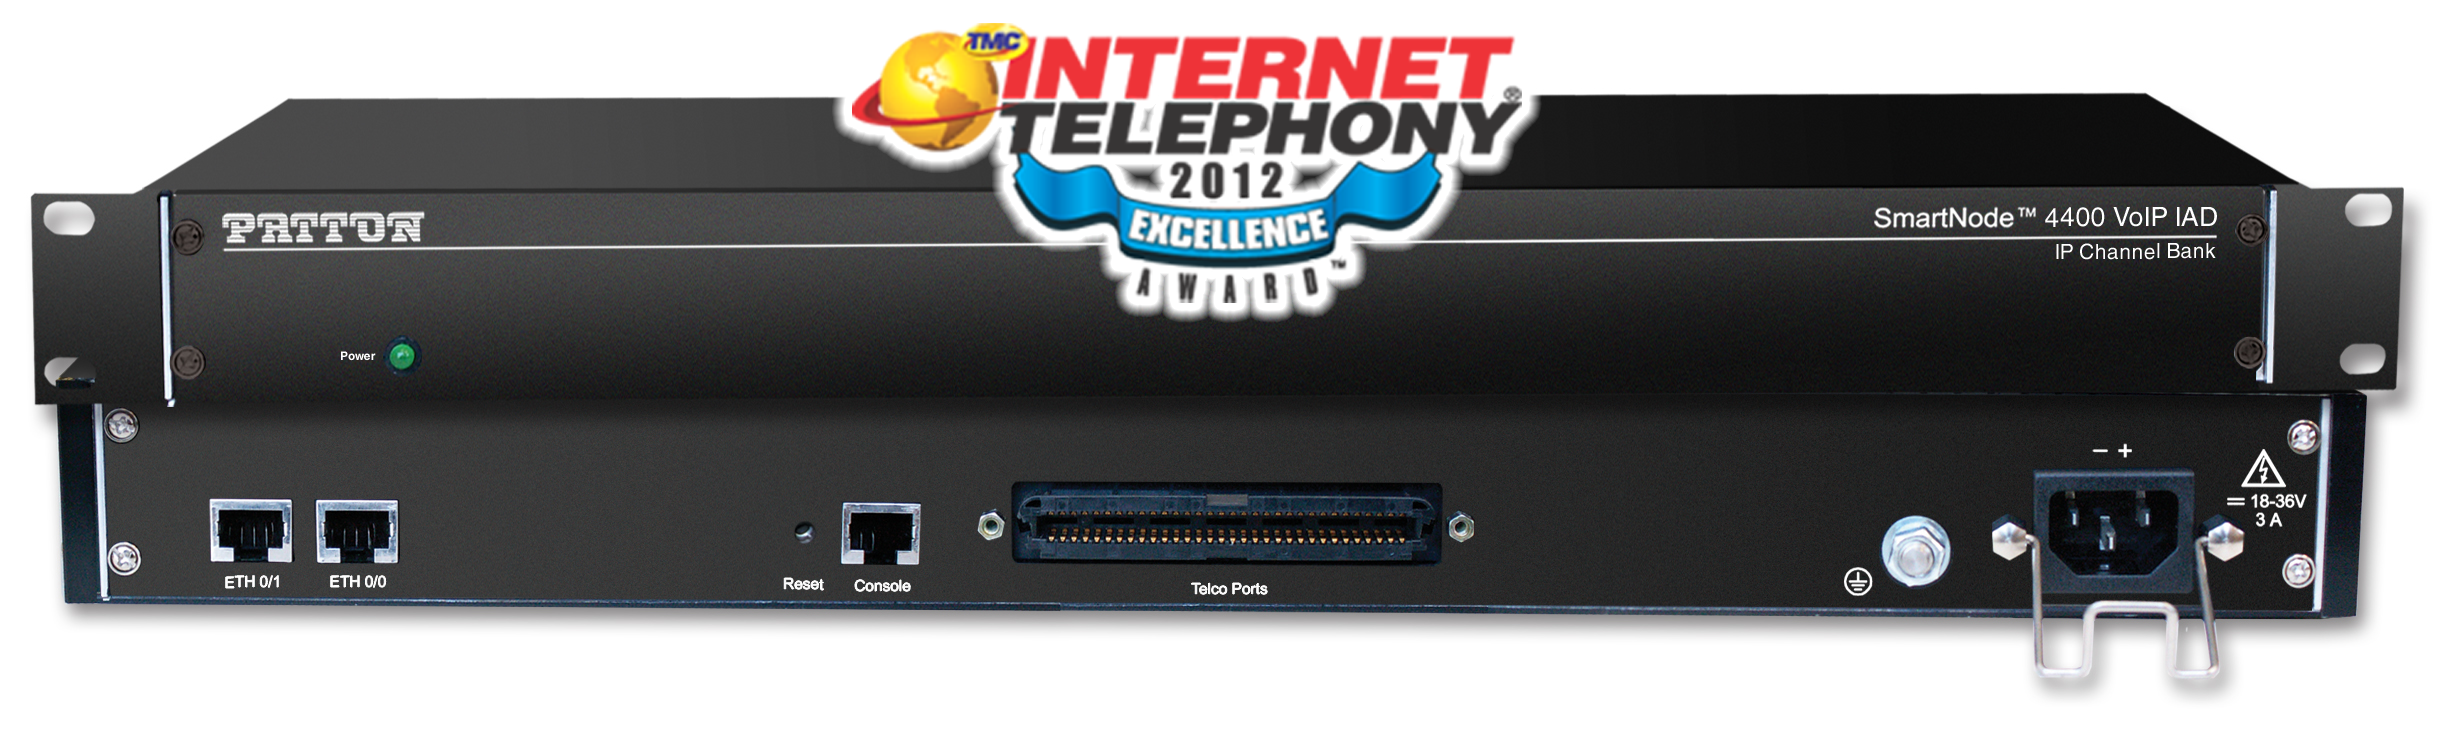 Patton SmartNode SN4412/JO/UI IpChannelBank Analog VoIP Router | 12 FXO ports